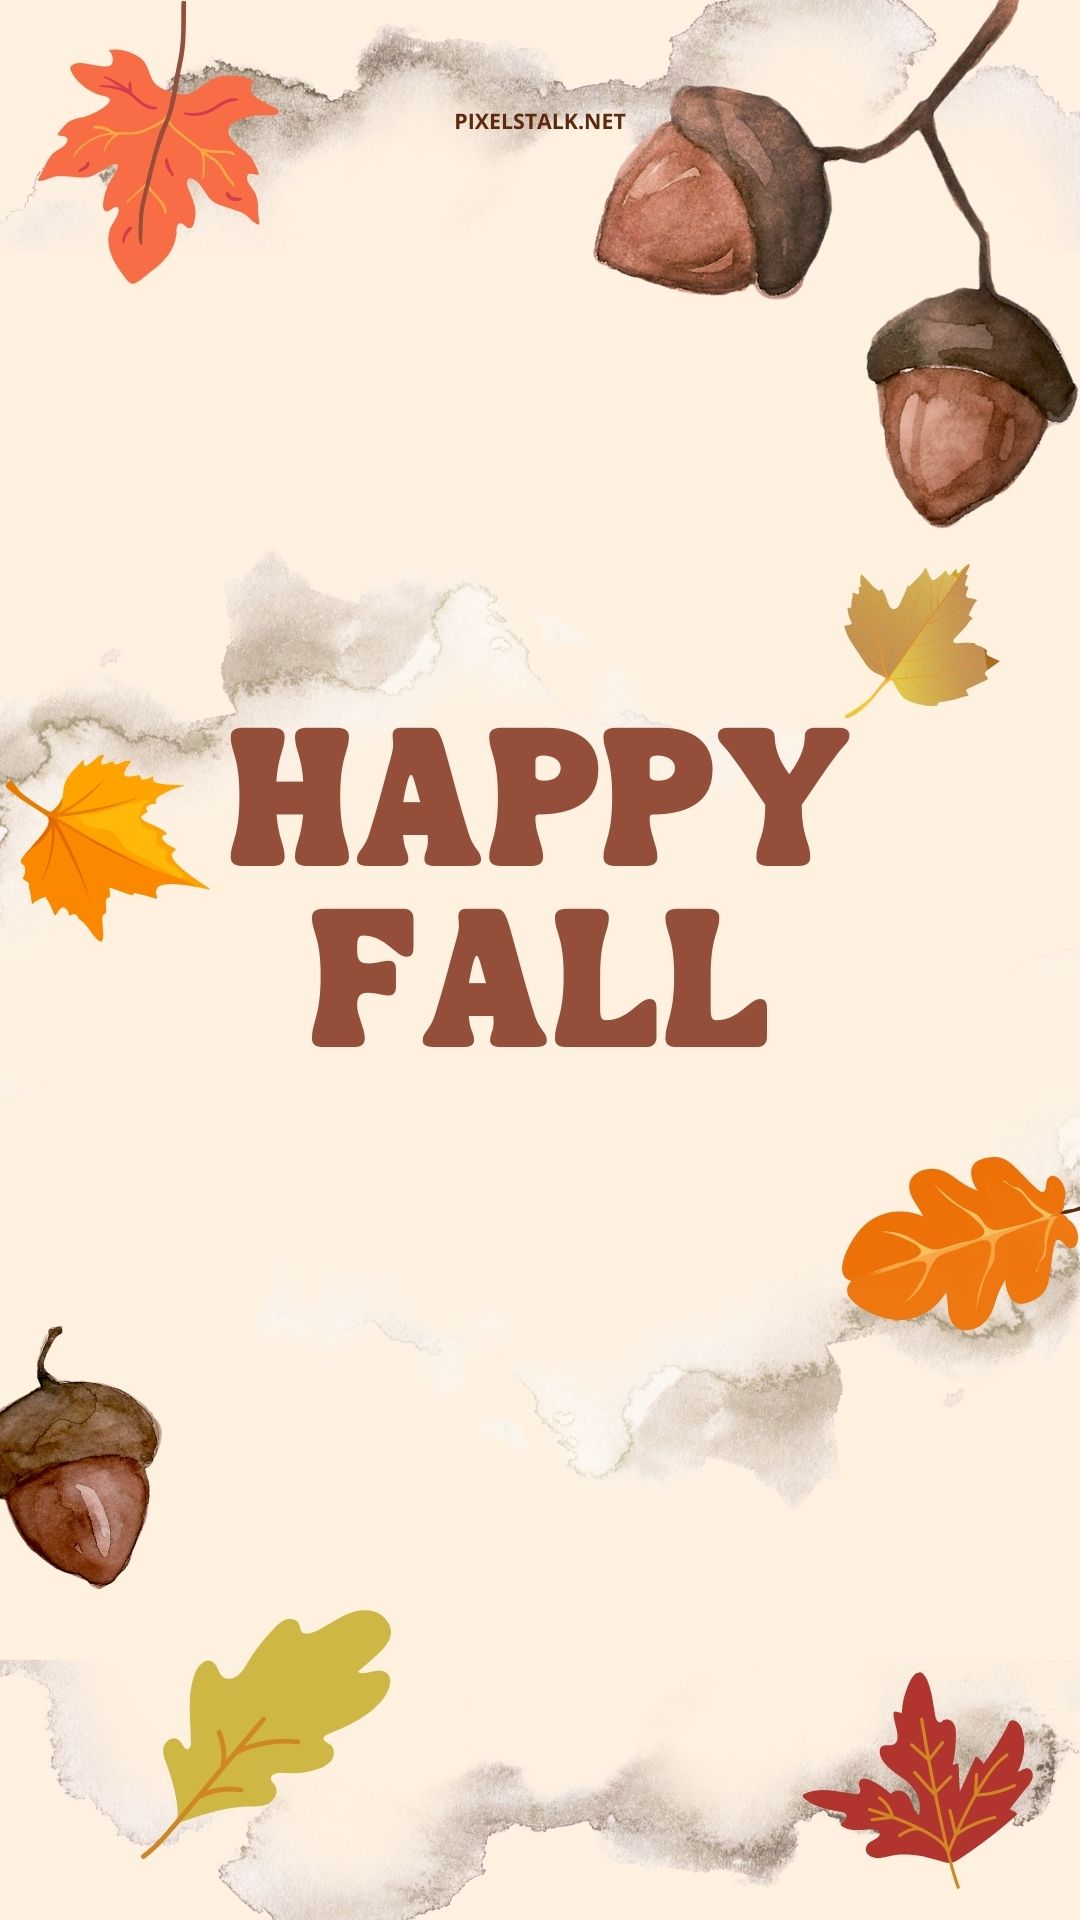 Happy fall greeting card - Fall iPhone